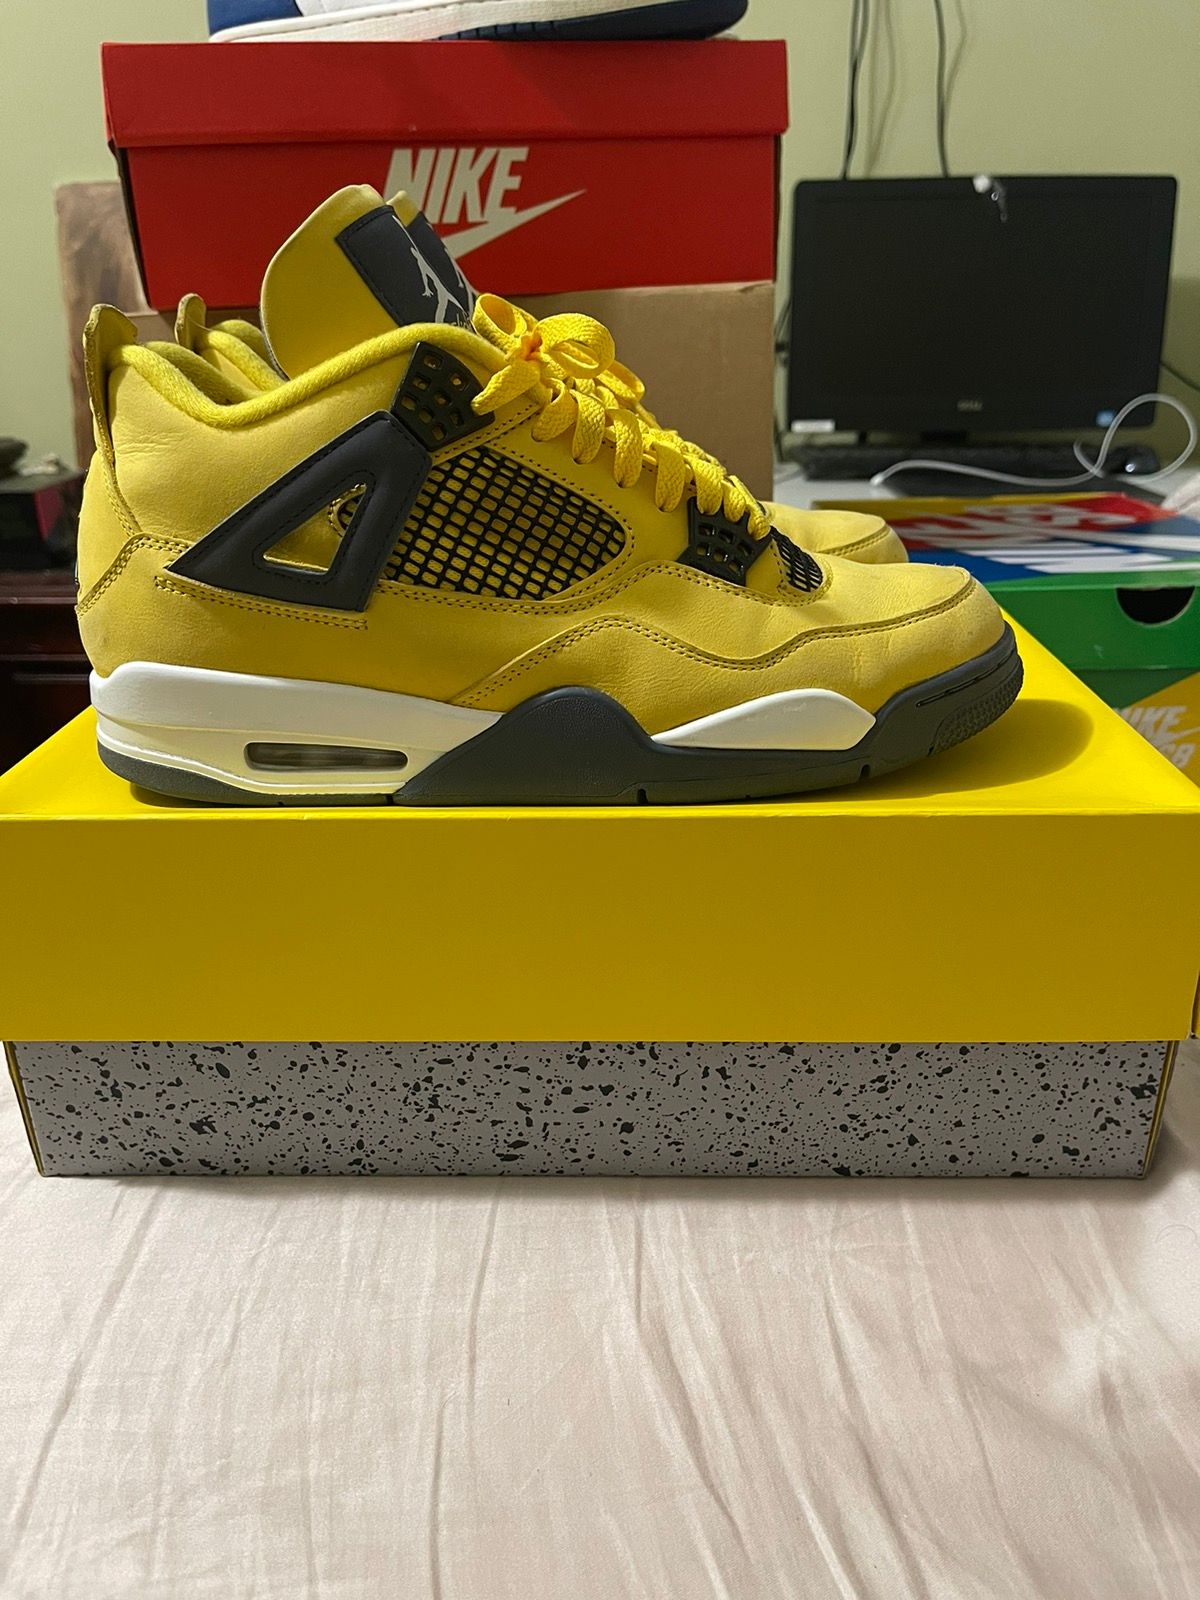 Pre-owned Jordan Nike Air Jordan 4 Lightning Size 11.5 Shoes In Yellow